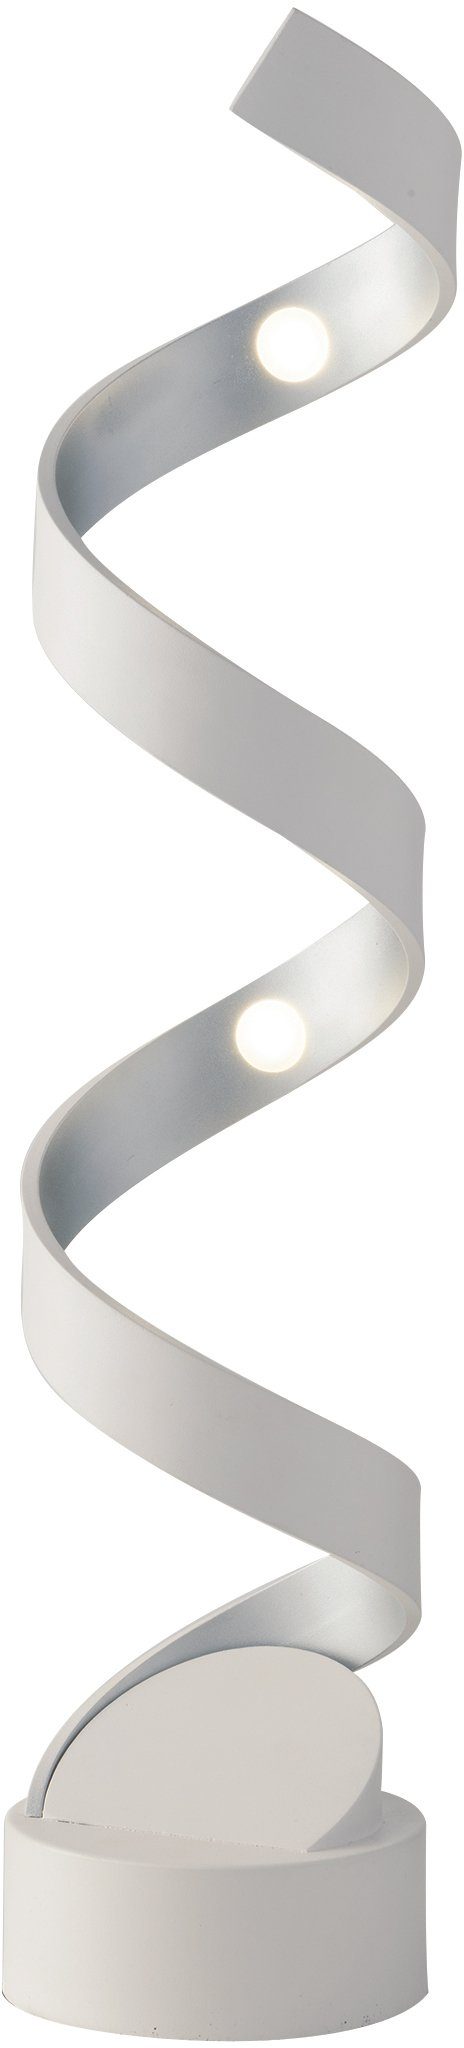 LED Design Tischleuchte HELIX, Warmweiß fest LED LUCE integriert,